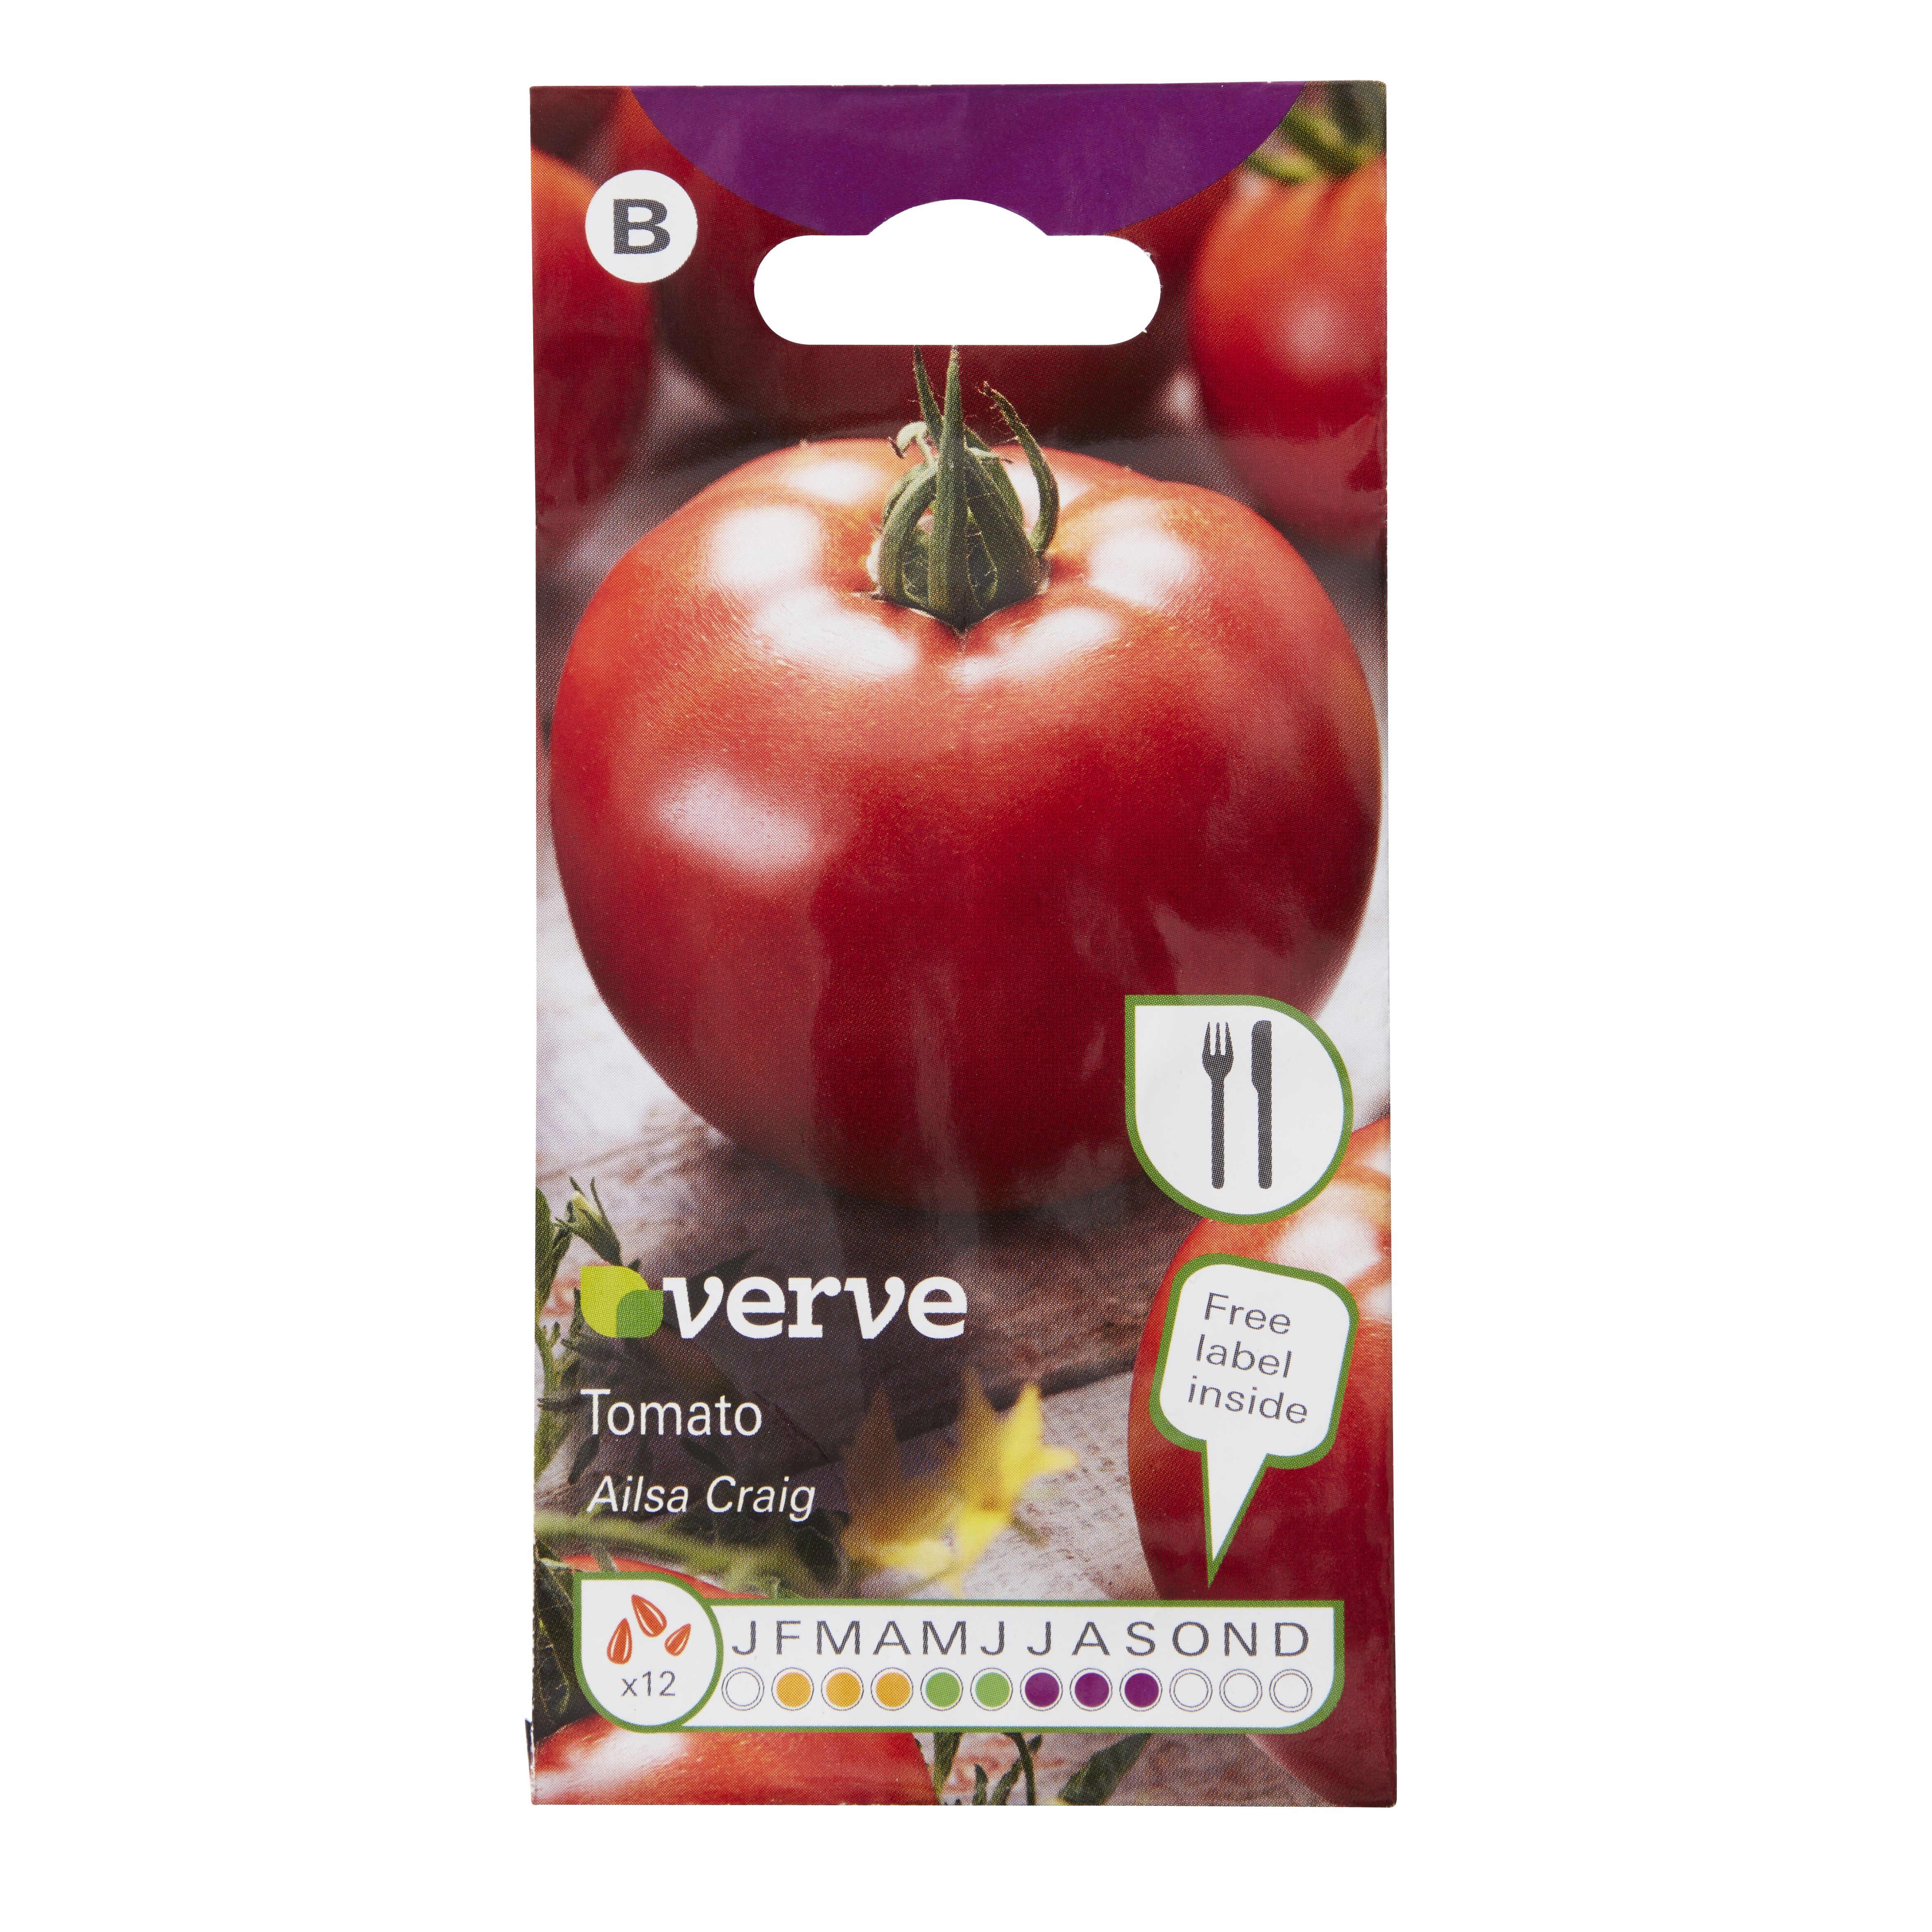 Ailsa craig tomato Seed